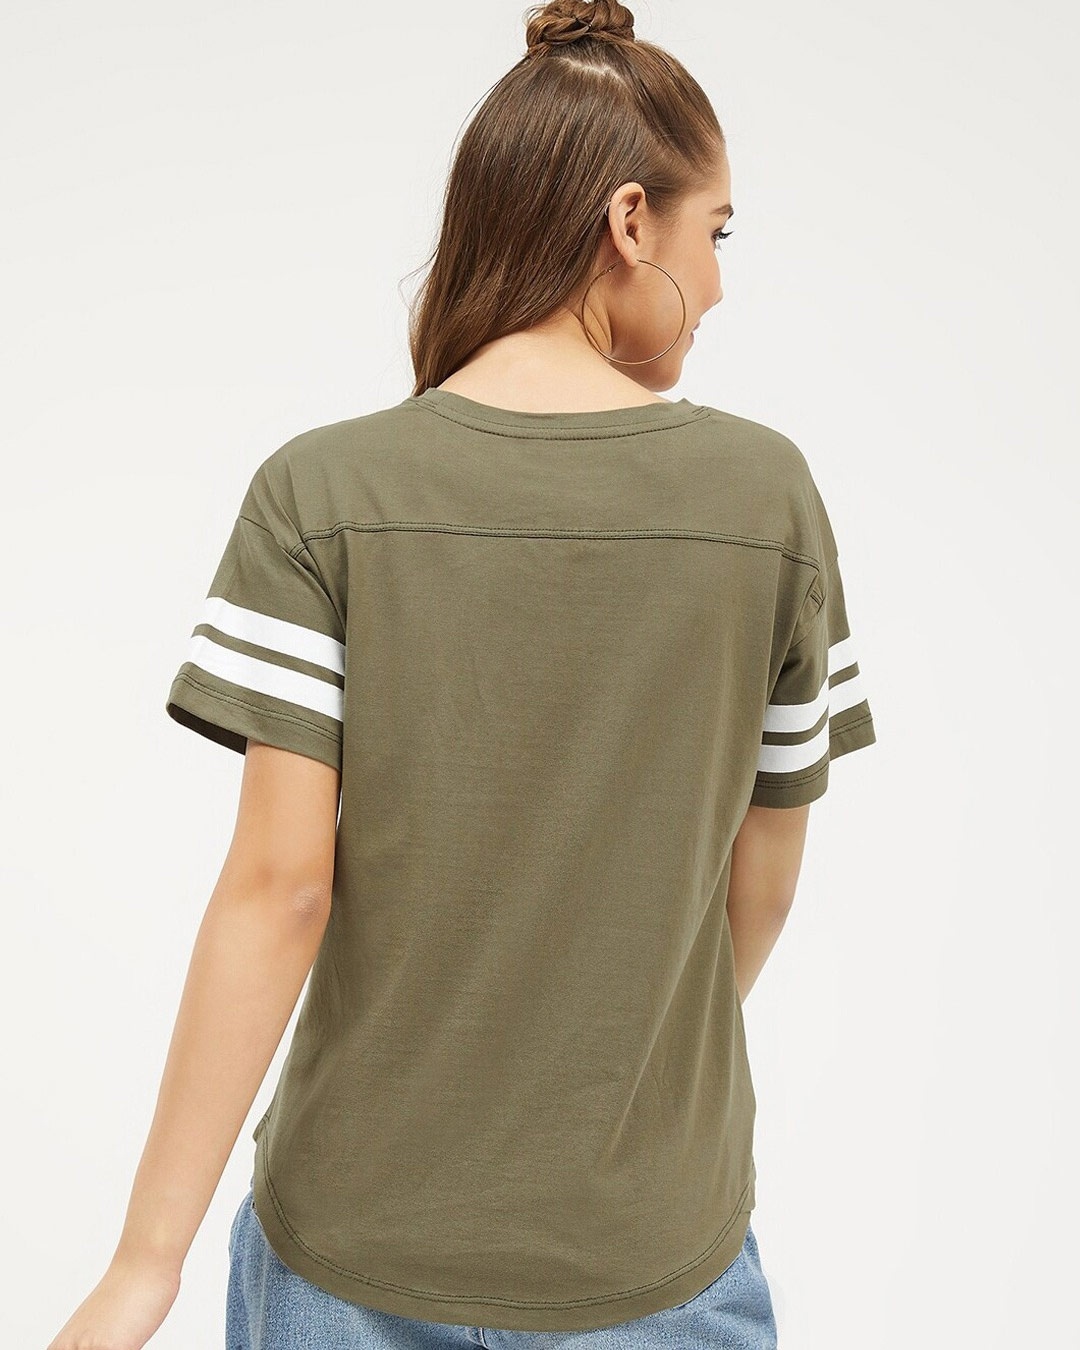 Shop Women's Round Neck Three Quarter Sleeves Solid T Shirt